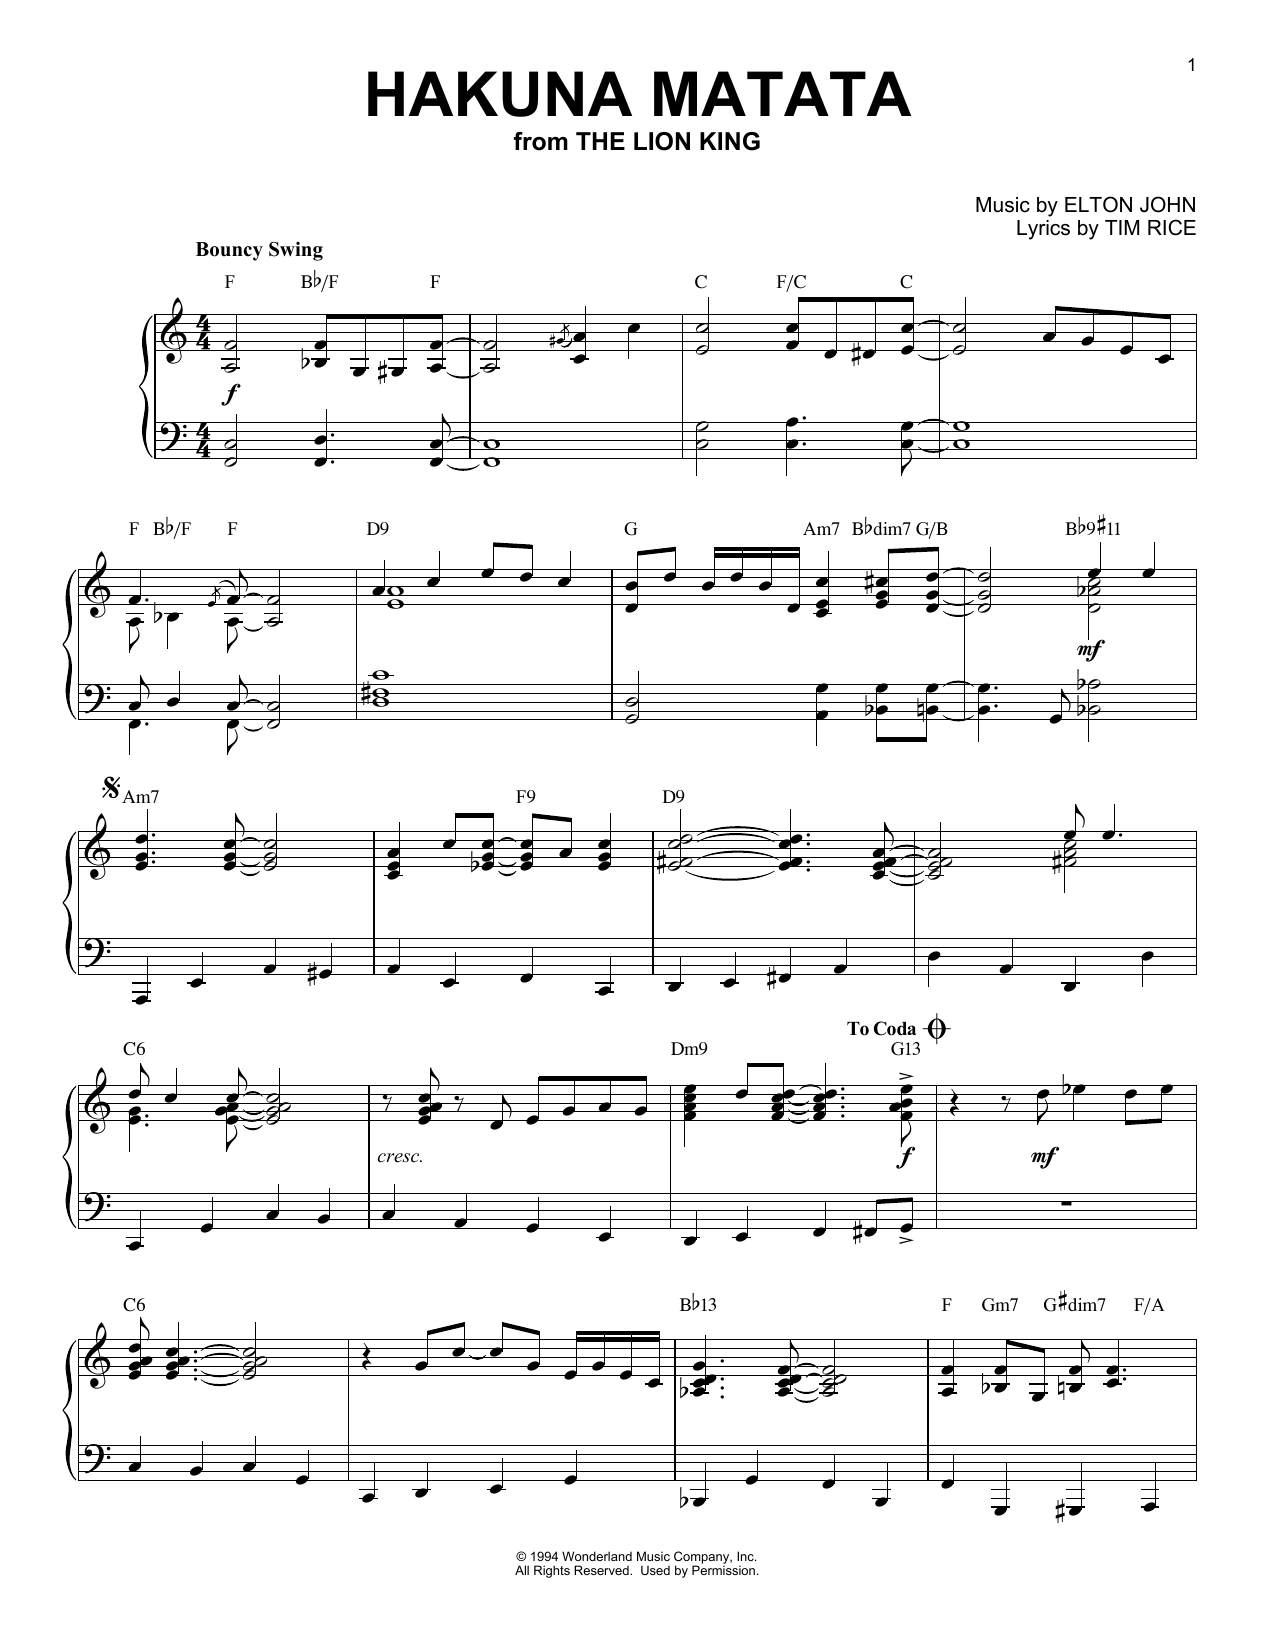 Elton John Hakuna Matata [Jazz version] (from Disney's The Lion King) Sheet Music Notes & Chords for Piano - Download or Print PDF